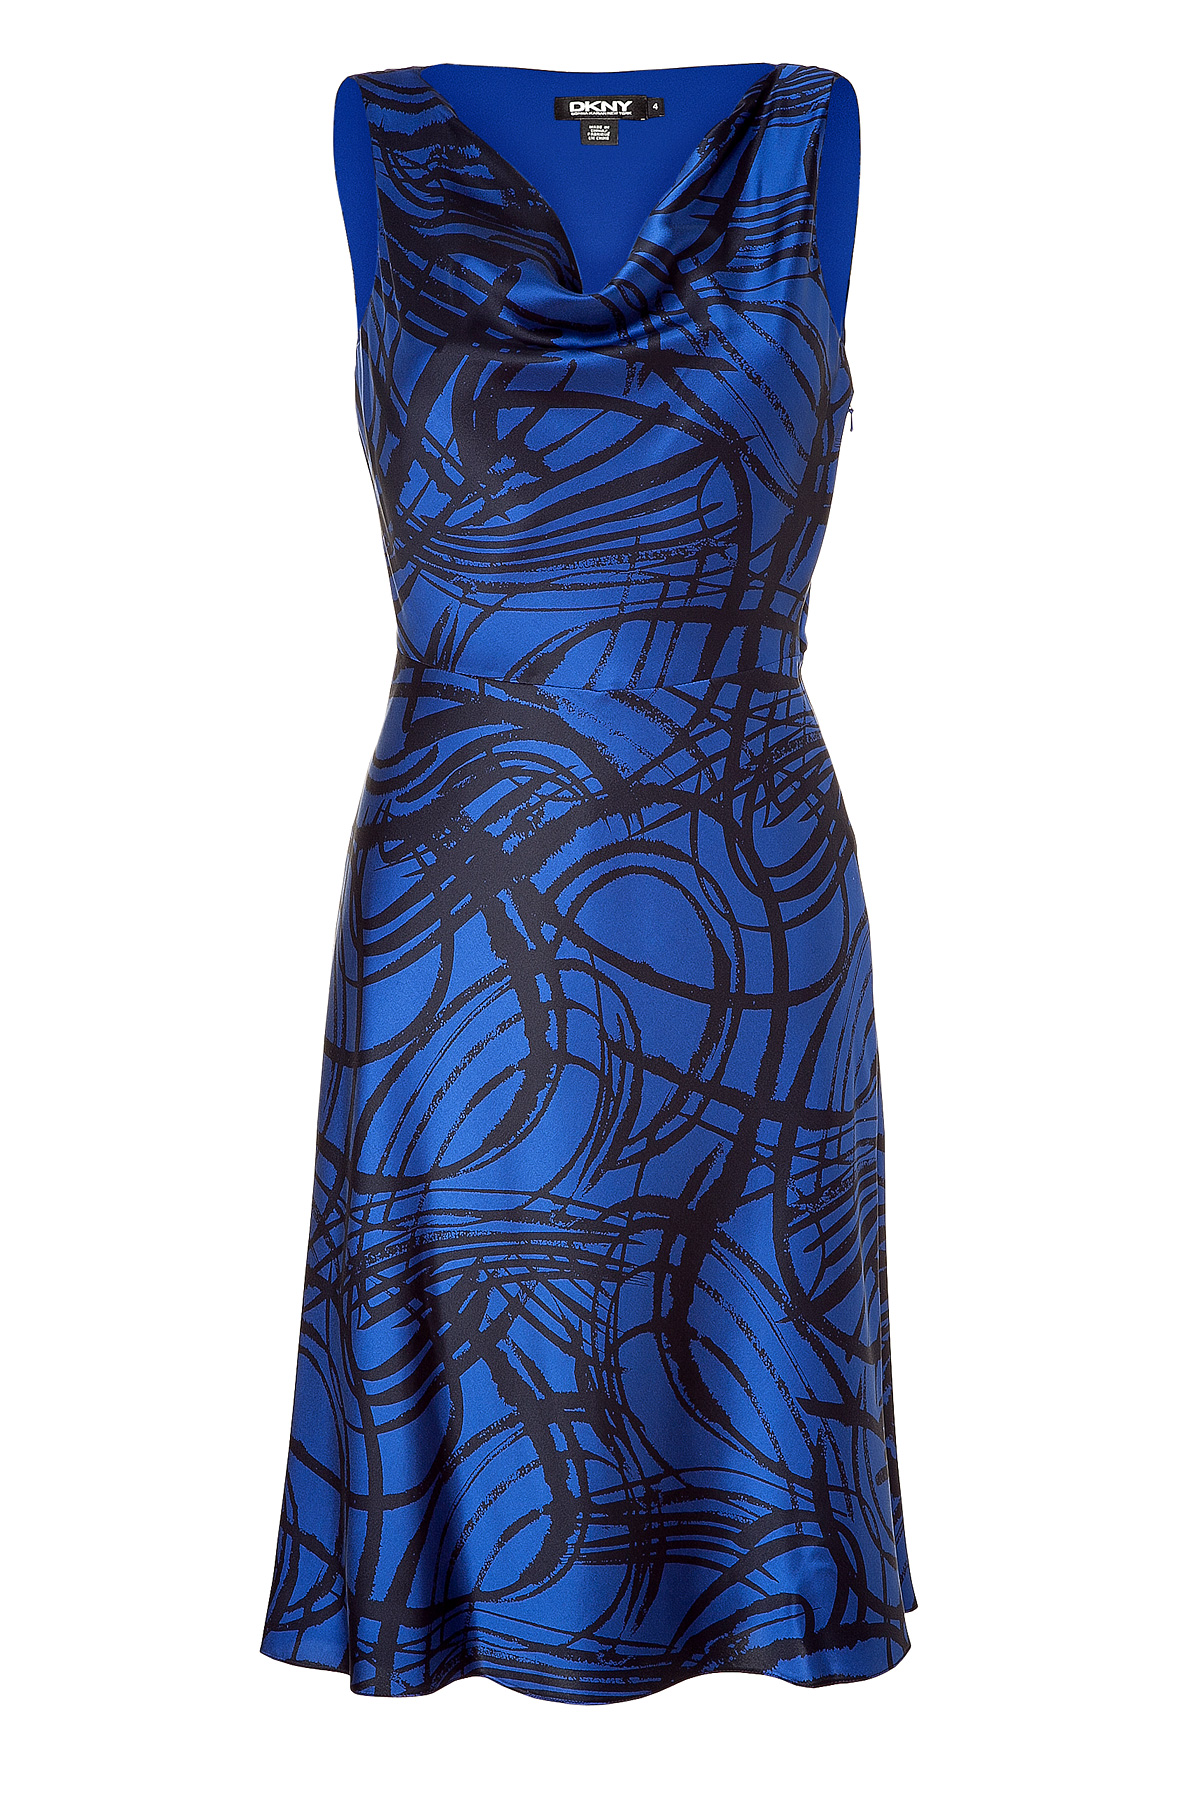 Dkny Blue/black Printed Sleeveless Cowl Neck Dress in Blue | Lyst